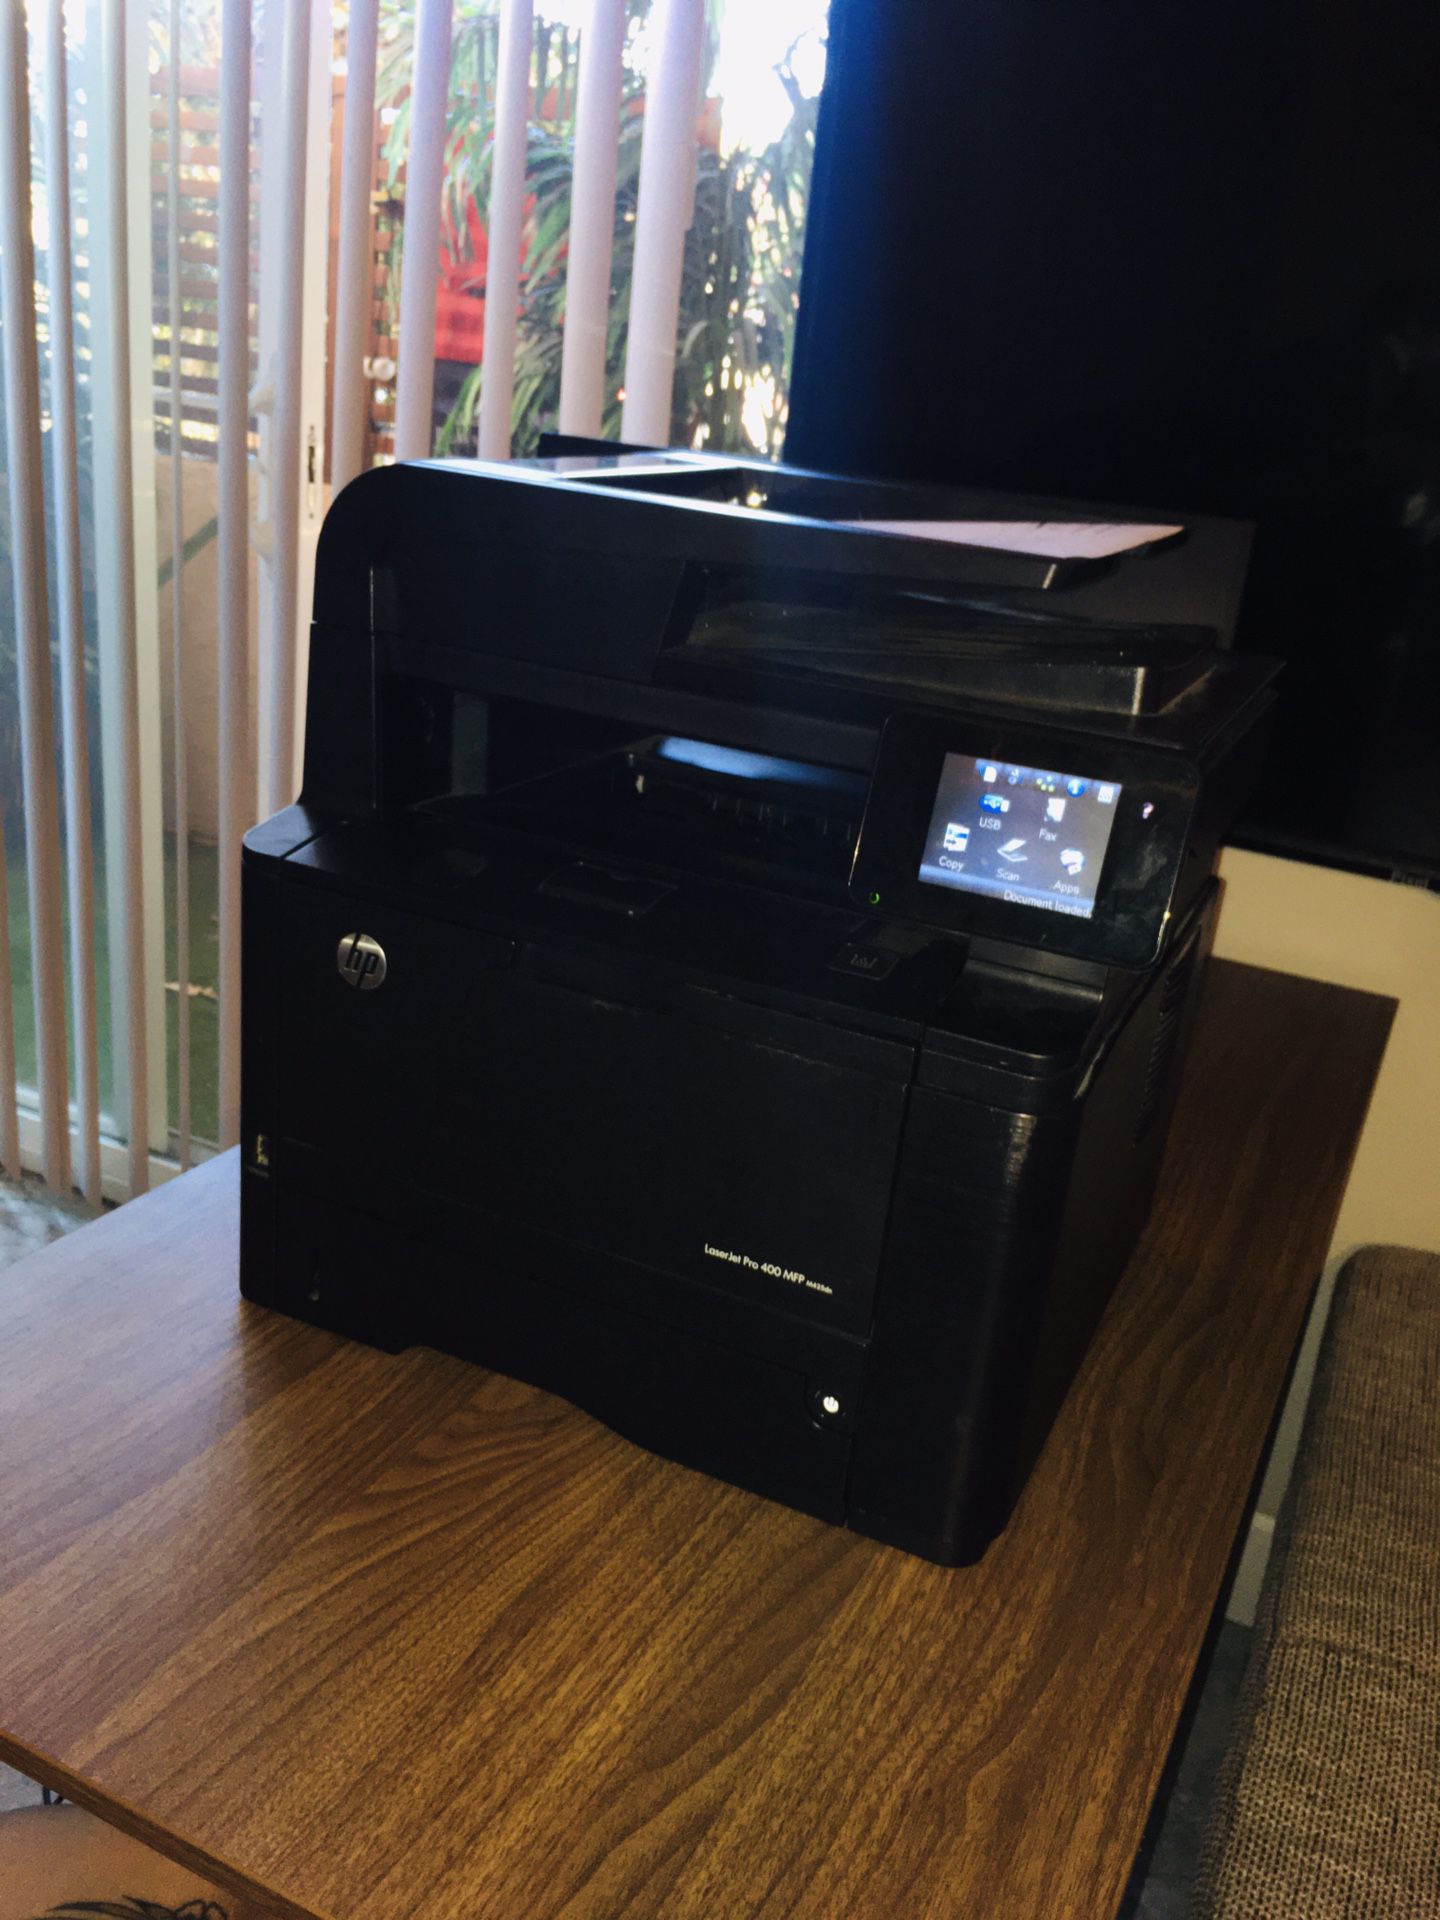 HP Laserjet Pro 400 MFP M425dn Printer